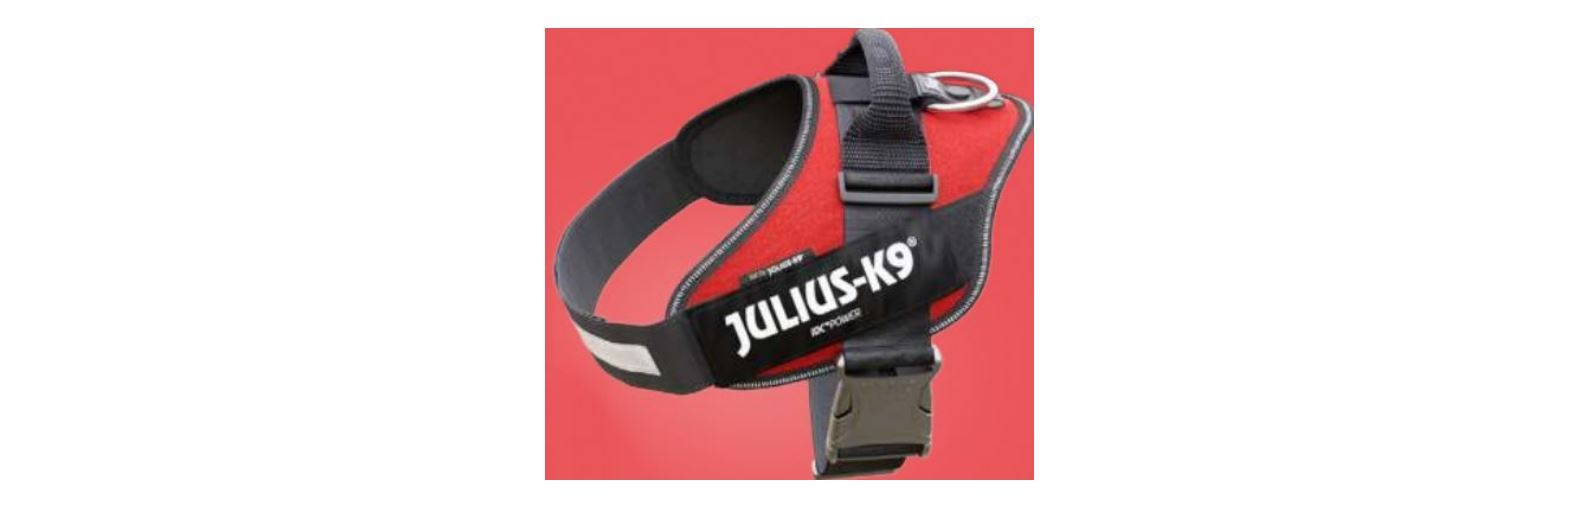 JULIUS-K9 Dog Power Harness